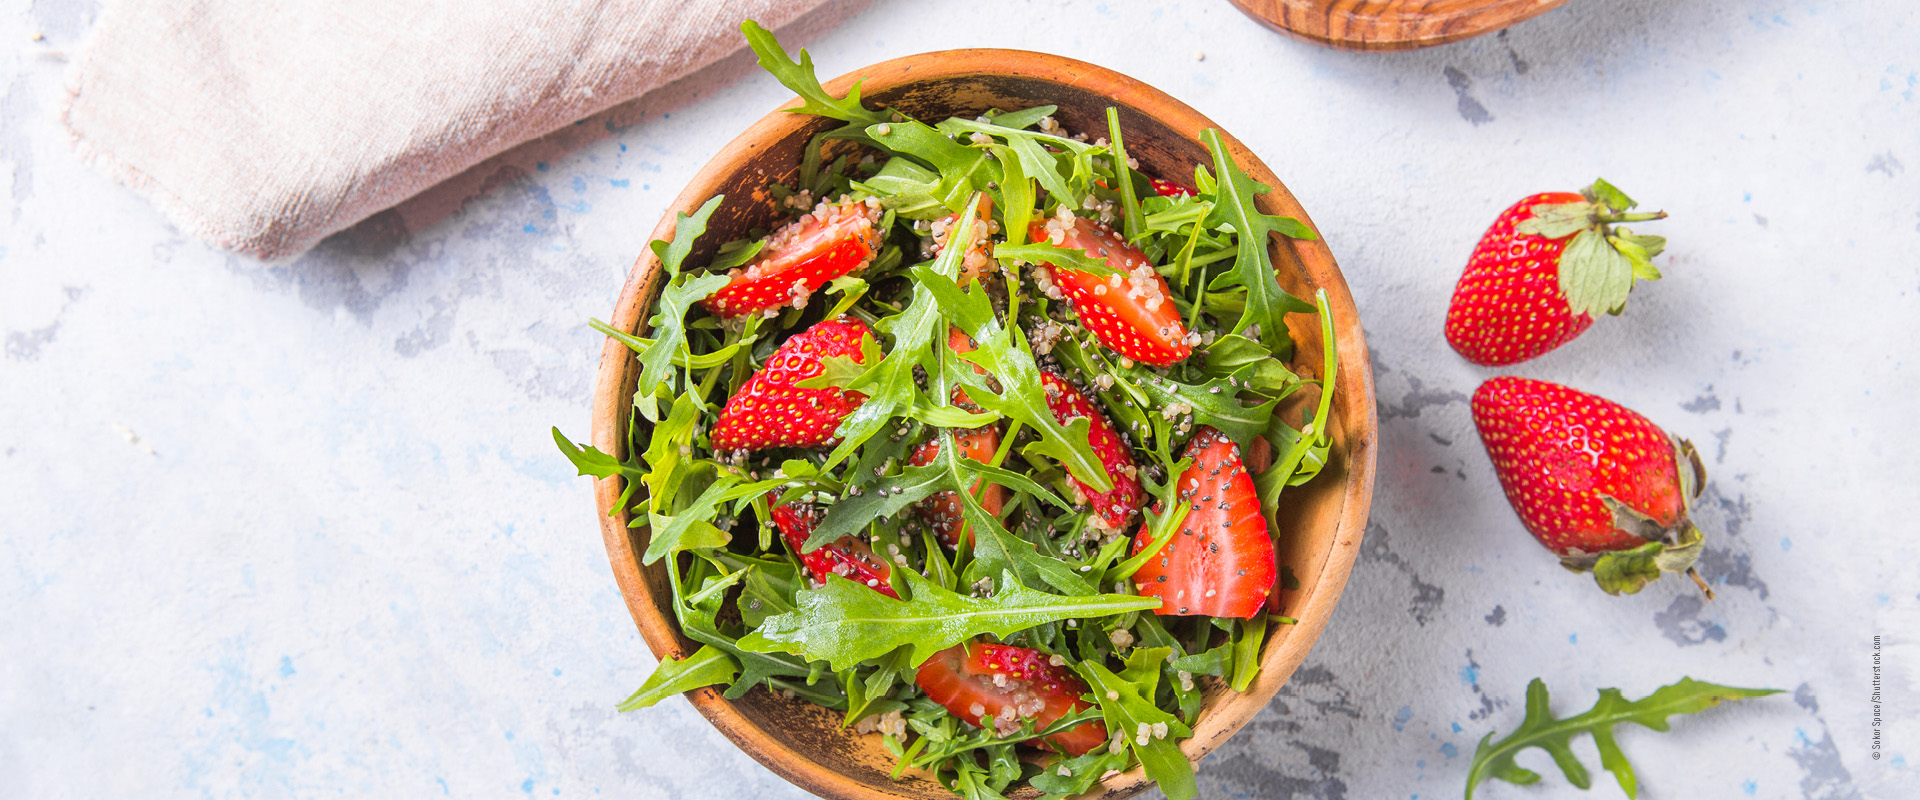 Erdbeer-Rucola Salat_Grillbeilagen